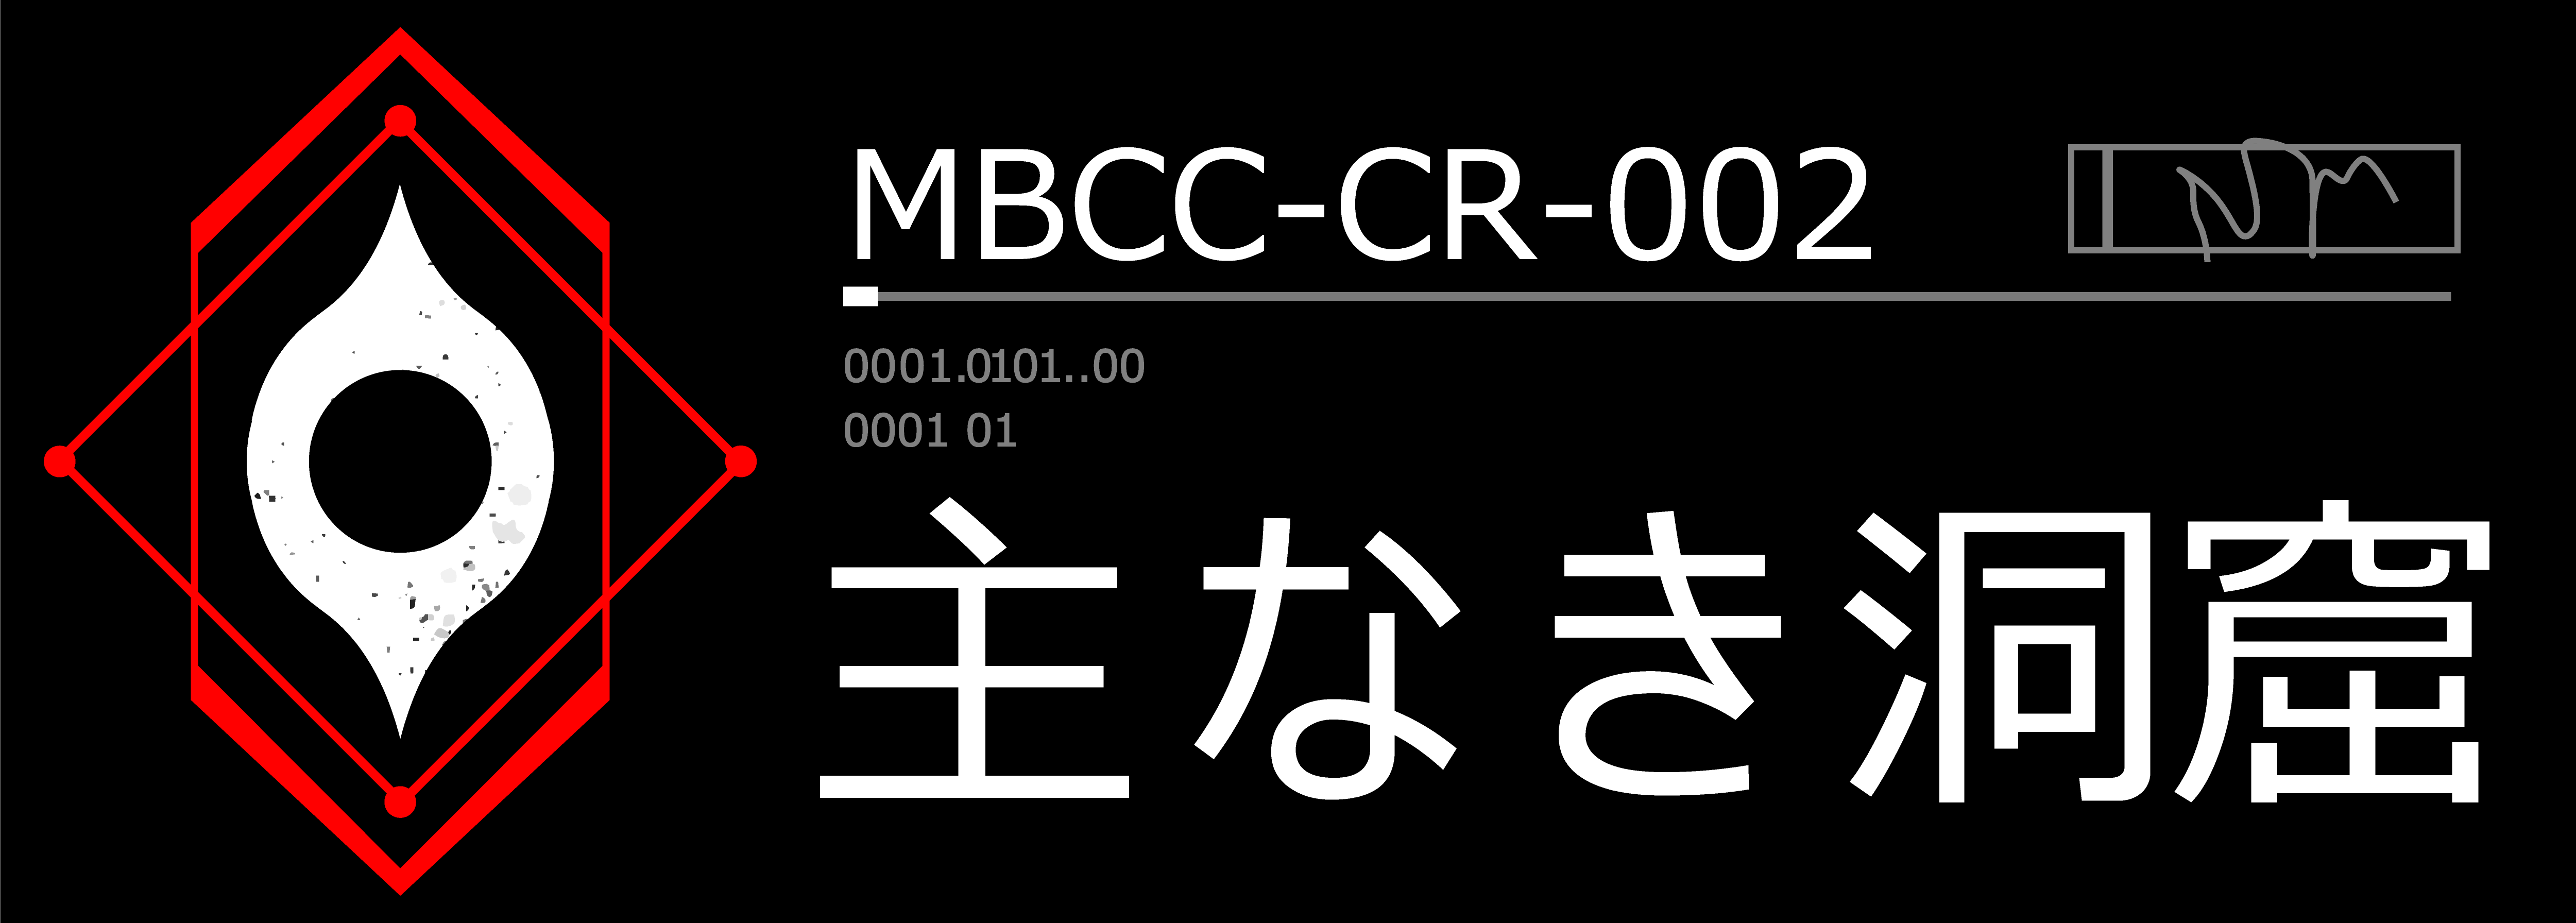 MBCC-CR-002.png